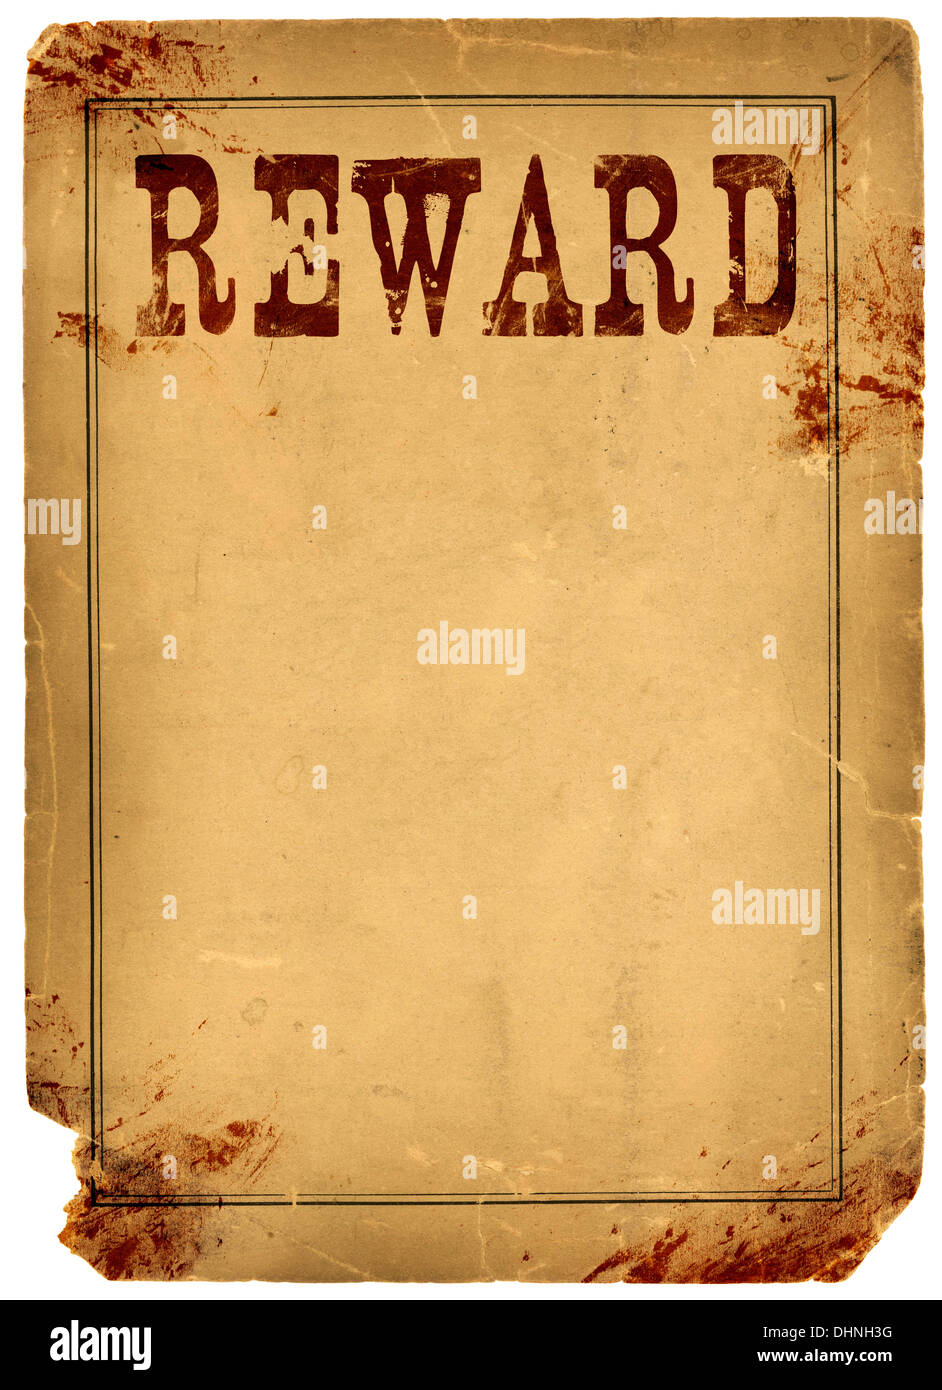 Reward Posters Template